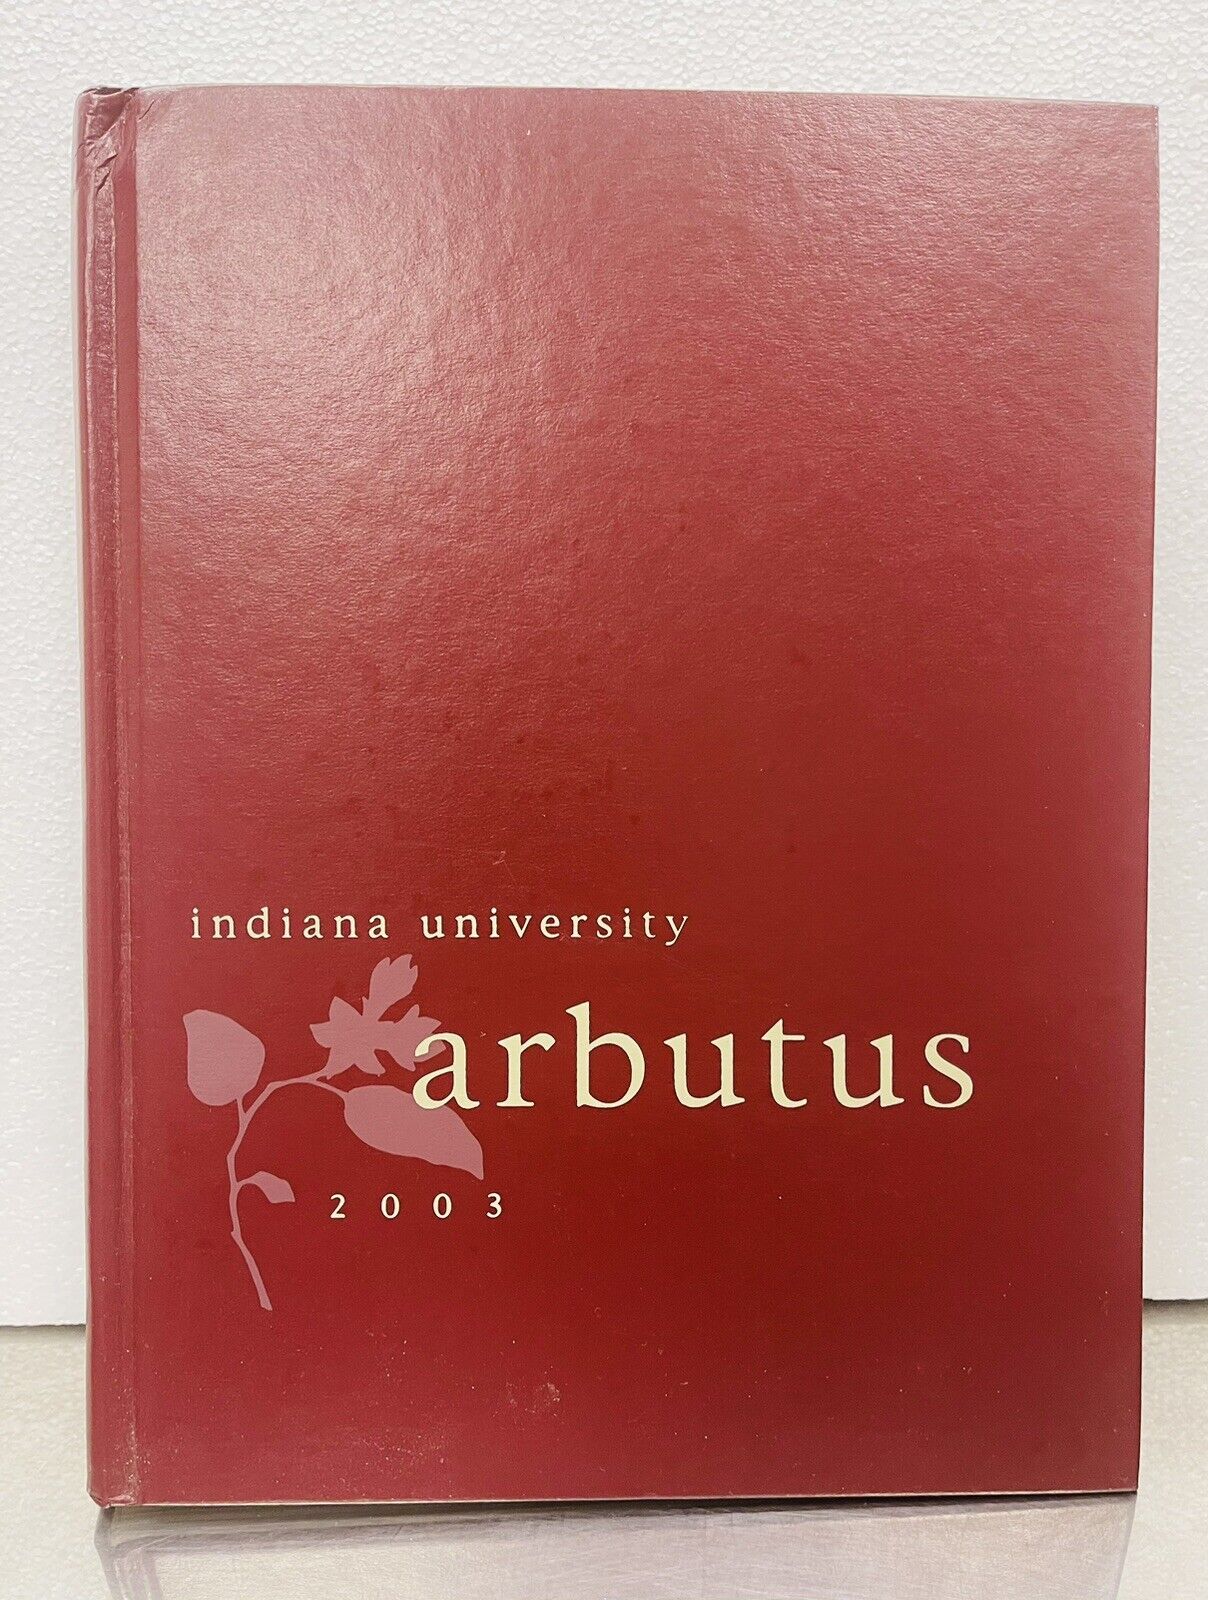 2003 Indiana University Yearbook - Arbutus